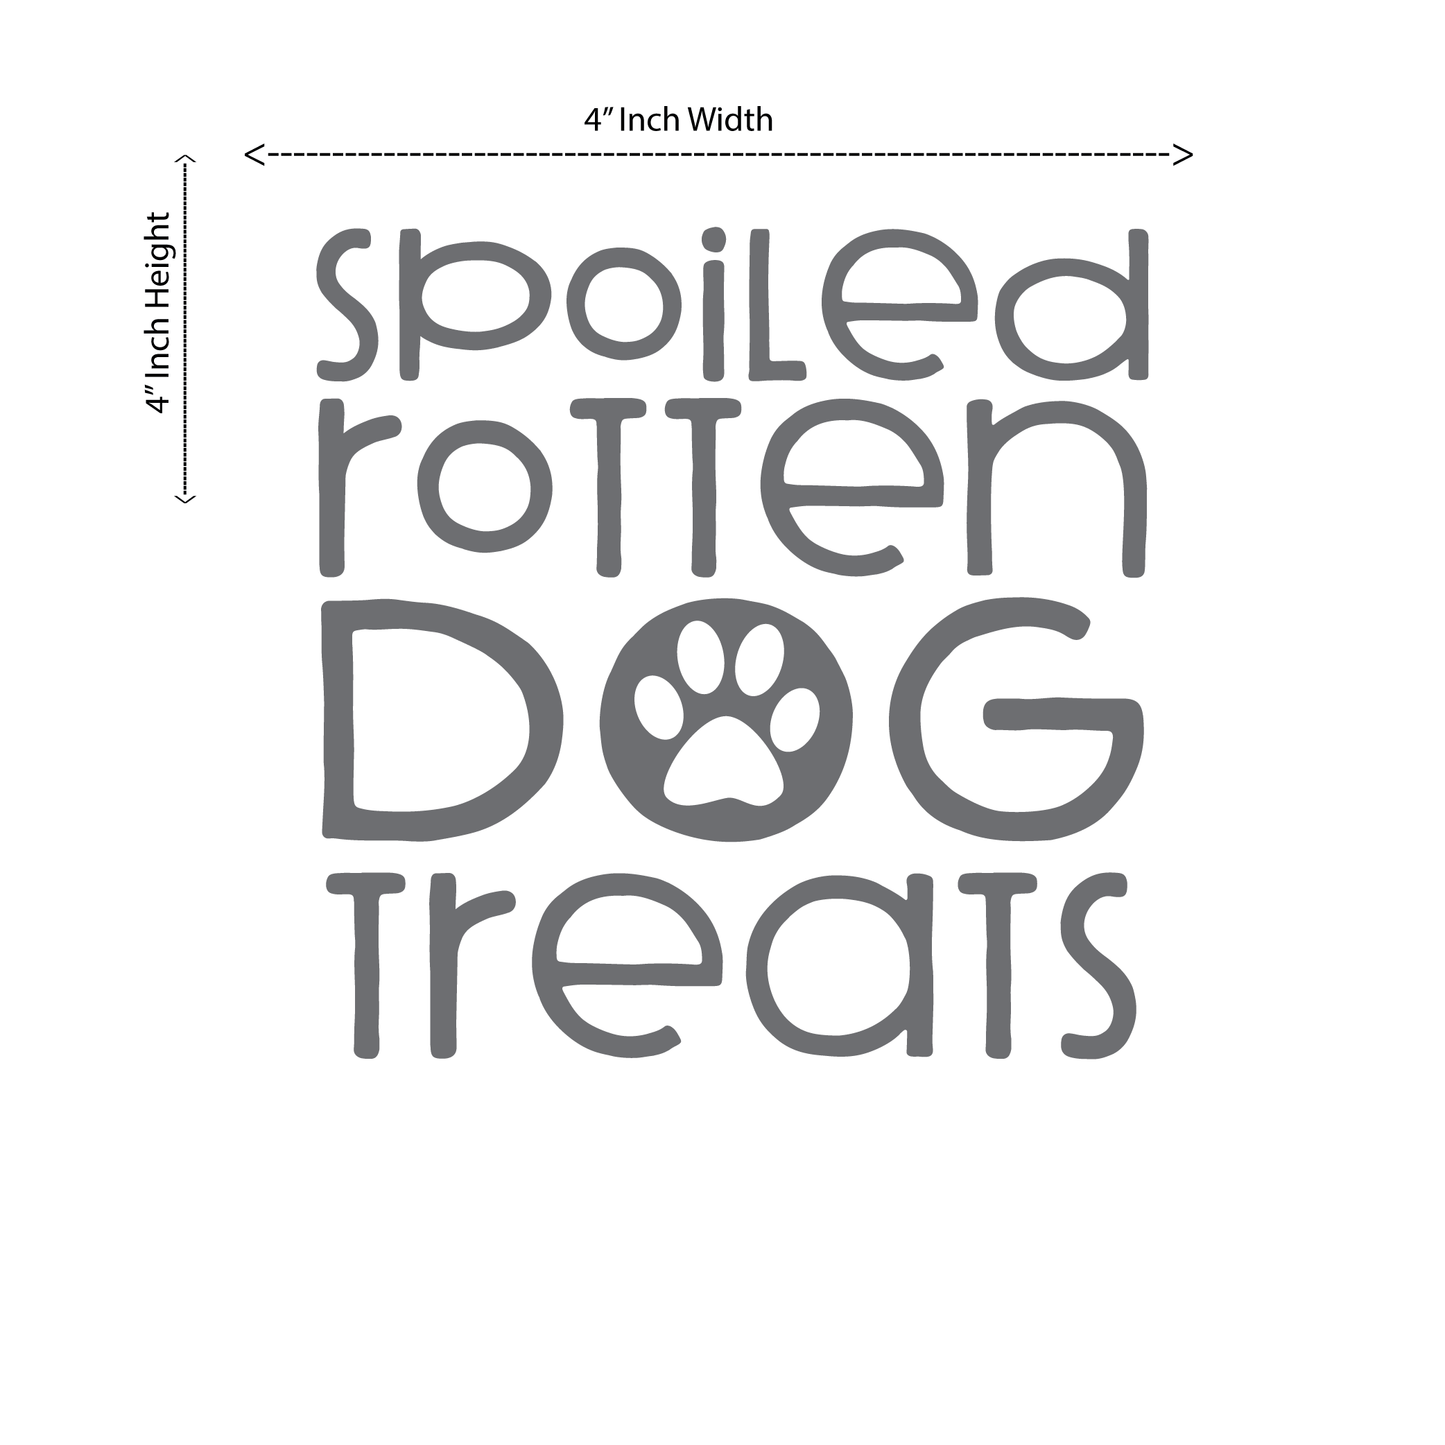 ShopVinylDesignStore.com Spoiled Rotten Dog Treats Wide 4"W x 4"H Shop Vinyl Design decals stickers